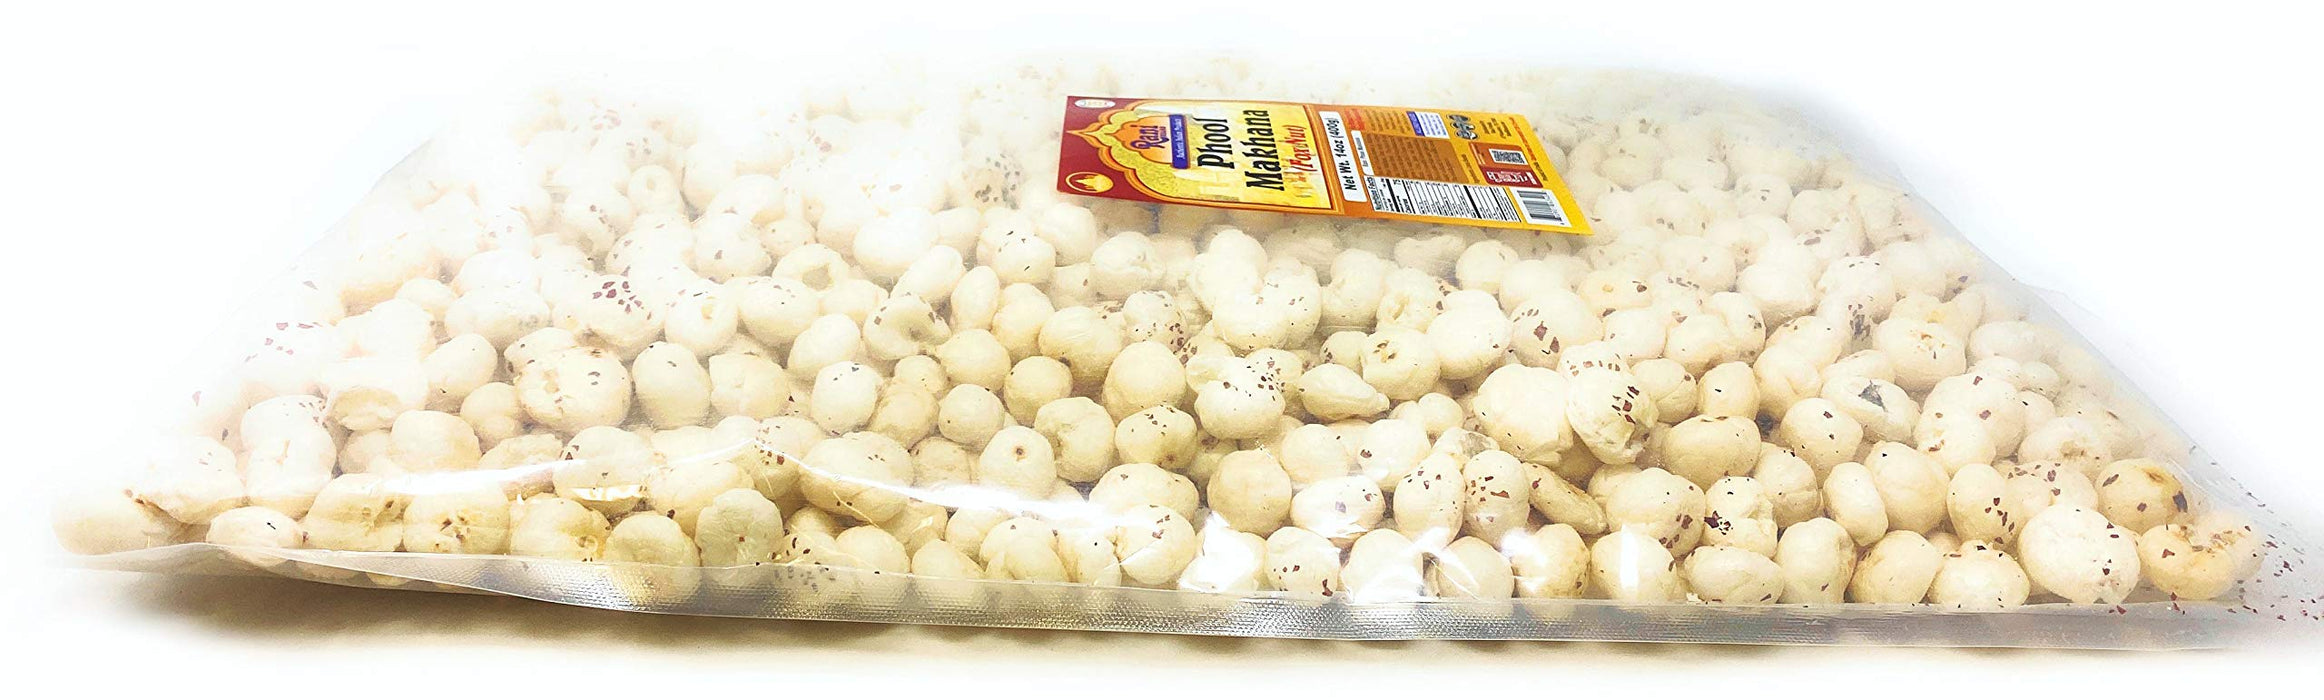 Rani Phool Makhana (Fox Nut / Popped Lotus Seed) 14oz (400g) ~ Plain Raw Uncooked | ~ All Natural | Vegan | No Colors | Gluten Friendly | NON-GMO